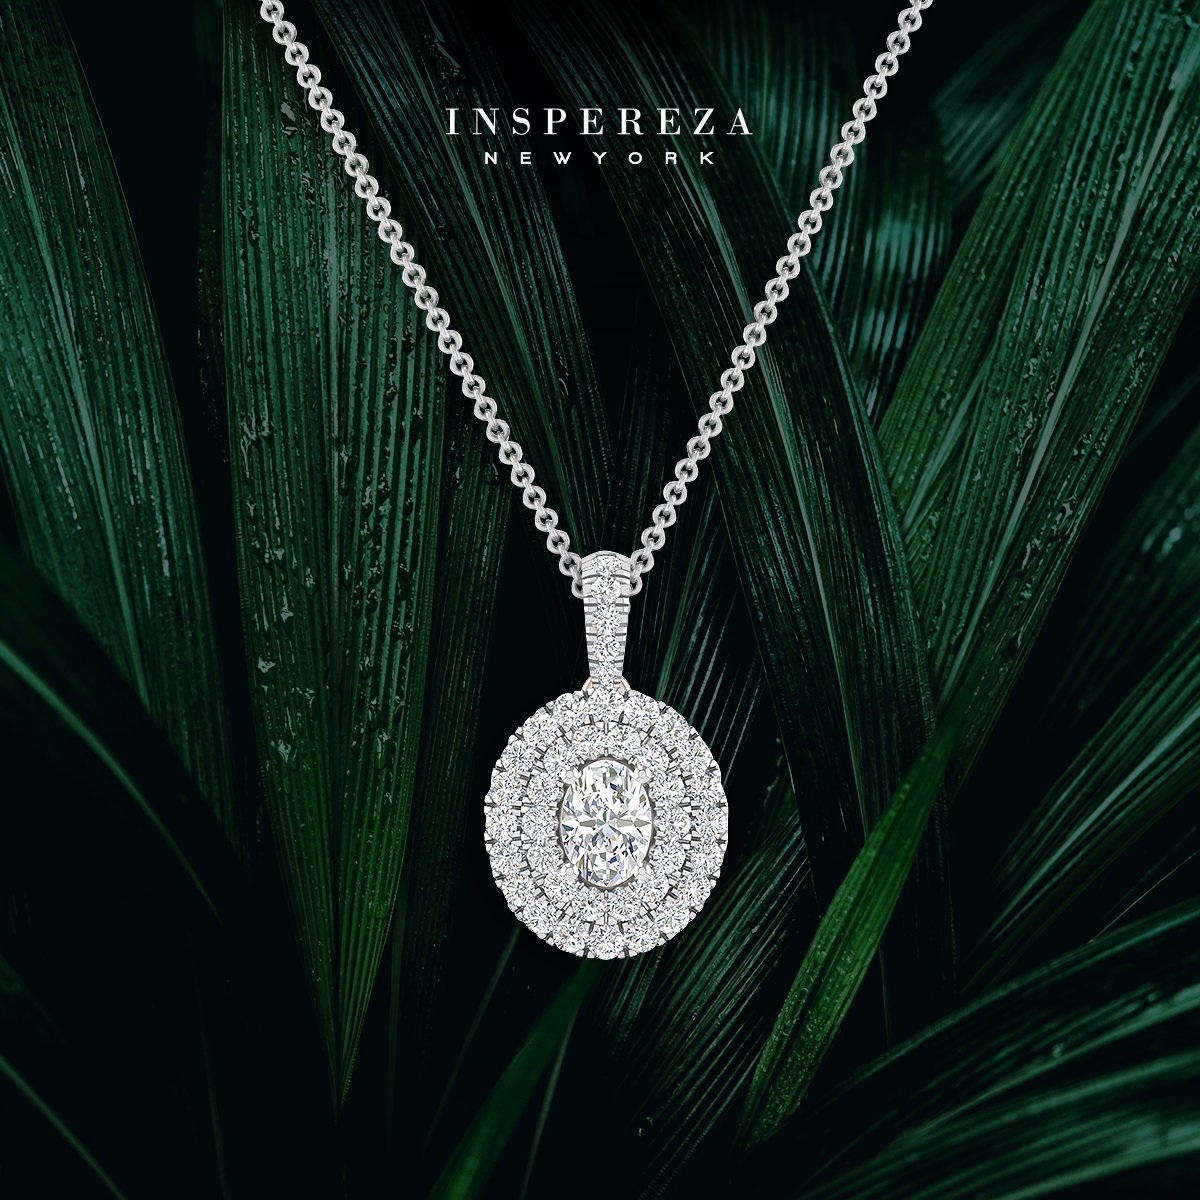 Shine bright like a diamond. This pendant reflects the confidence you carry within.
Shop now: shorturl.at/eqTVY
#Inspereza #InsperezaNewyork #InsperezaInspiration #WomenJewelry #Jewelry #Gemstone #Pendant #DiamondPendant #HighJewelry